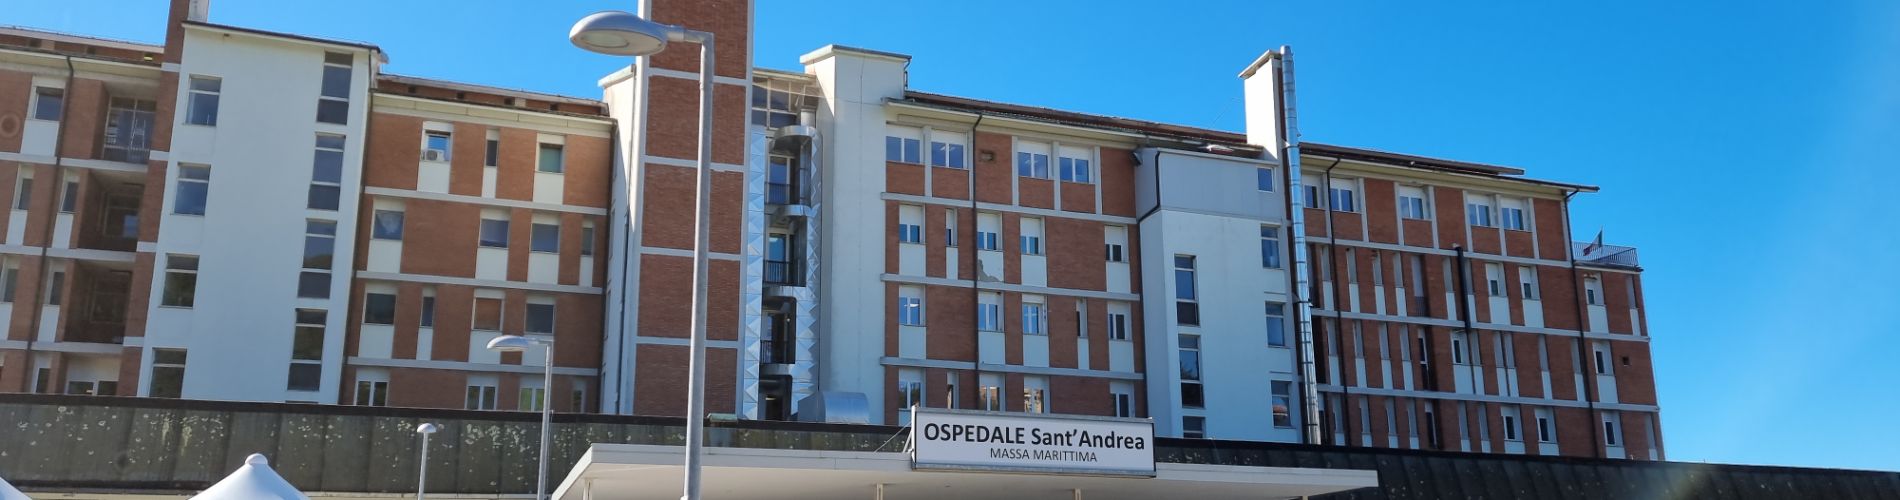 Ospedale Sant'Andrea 